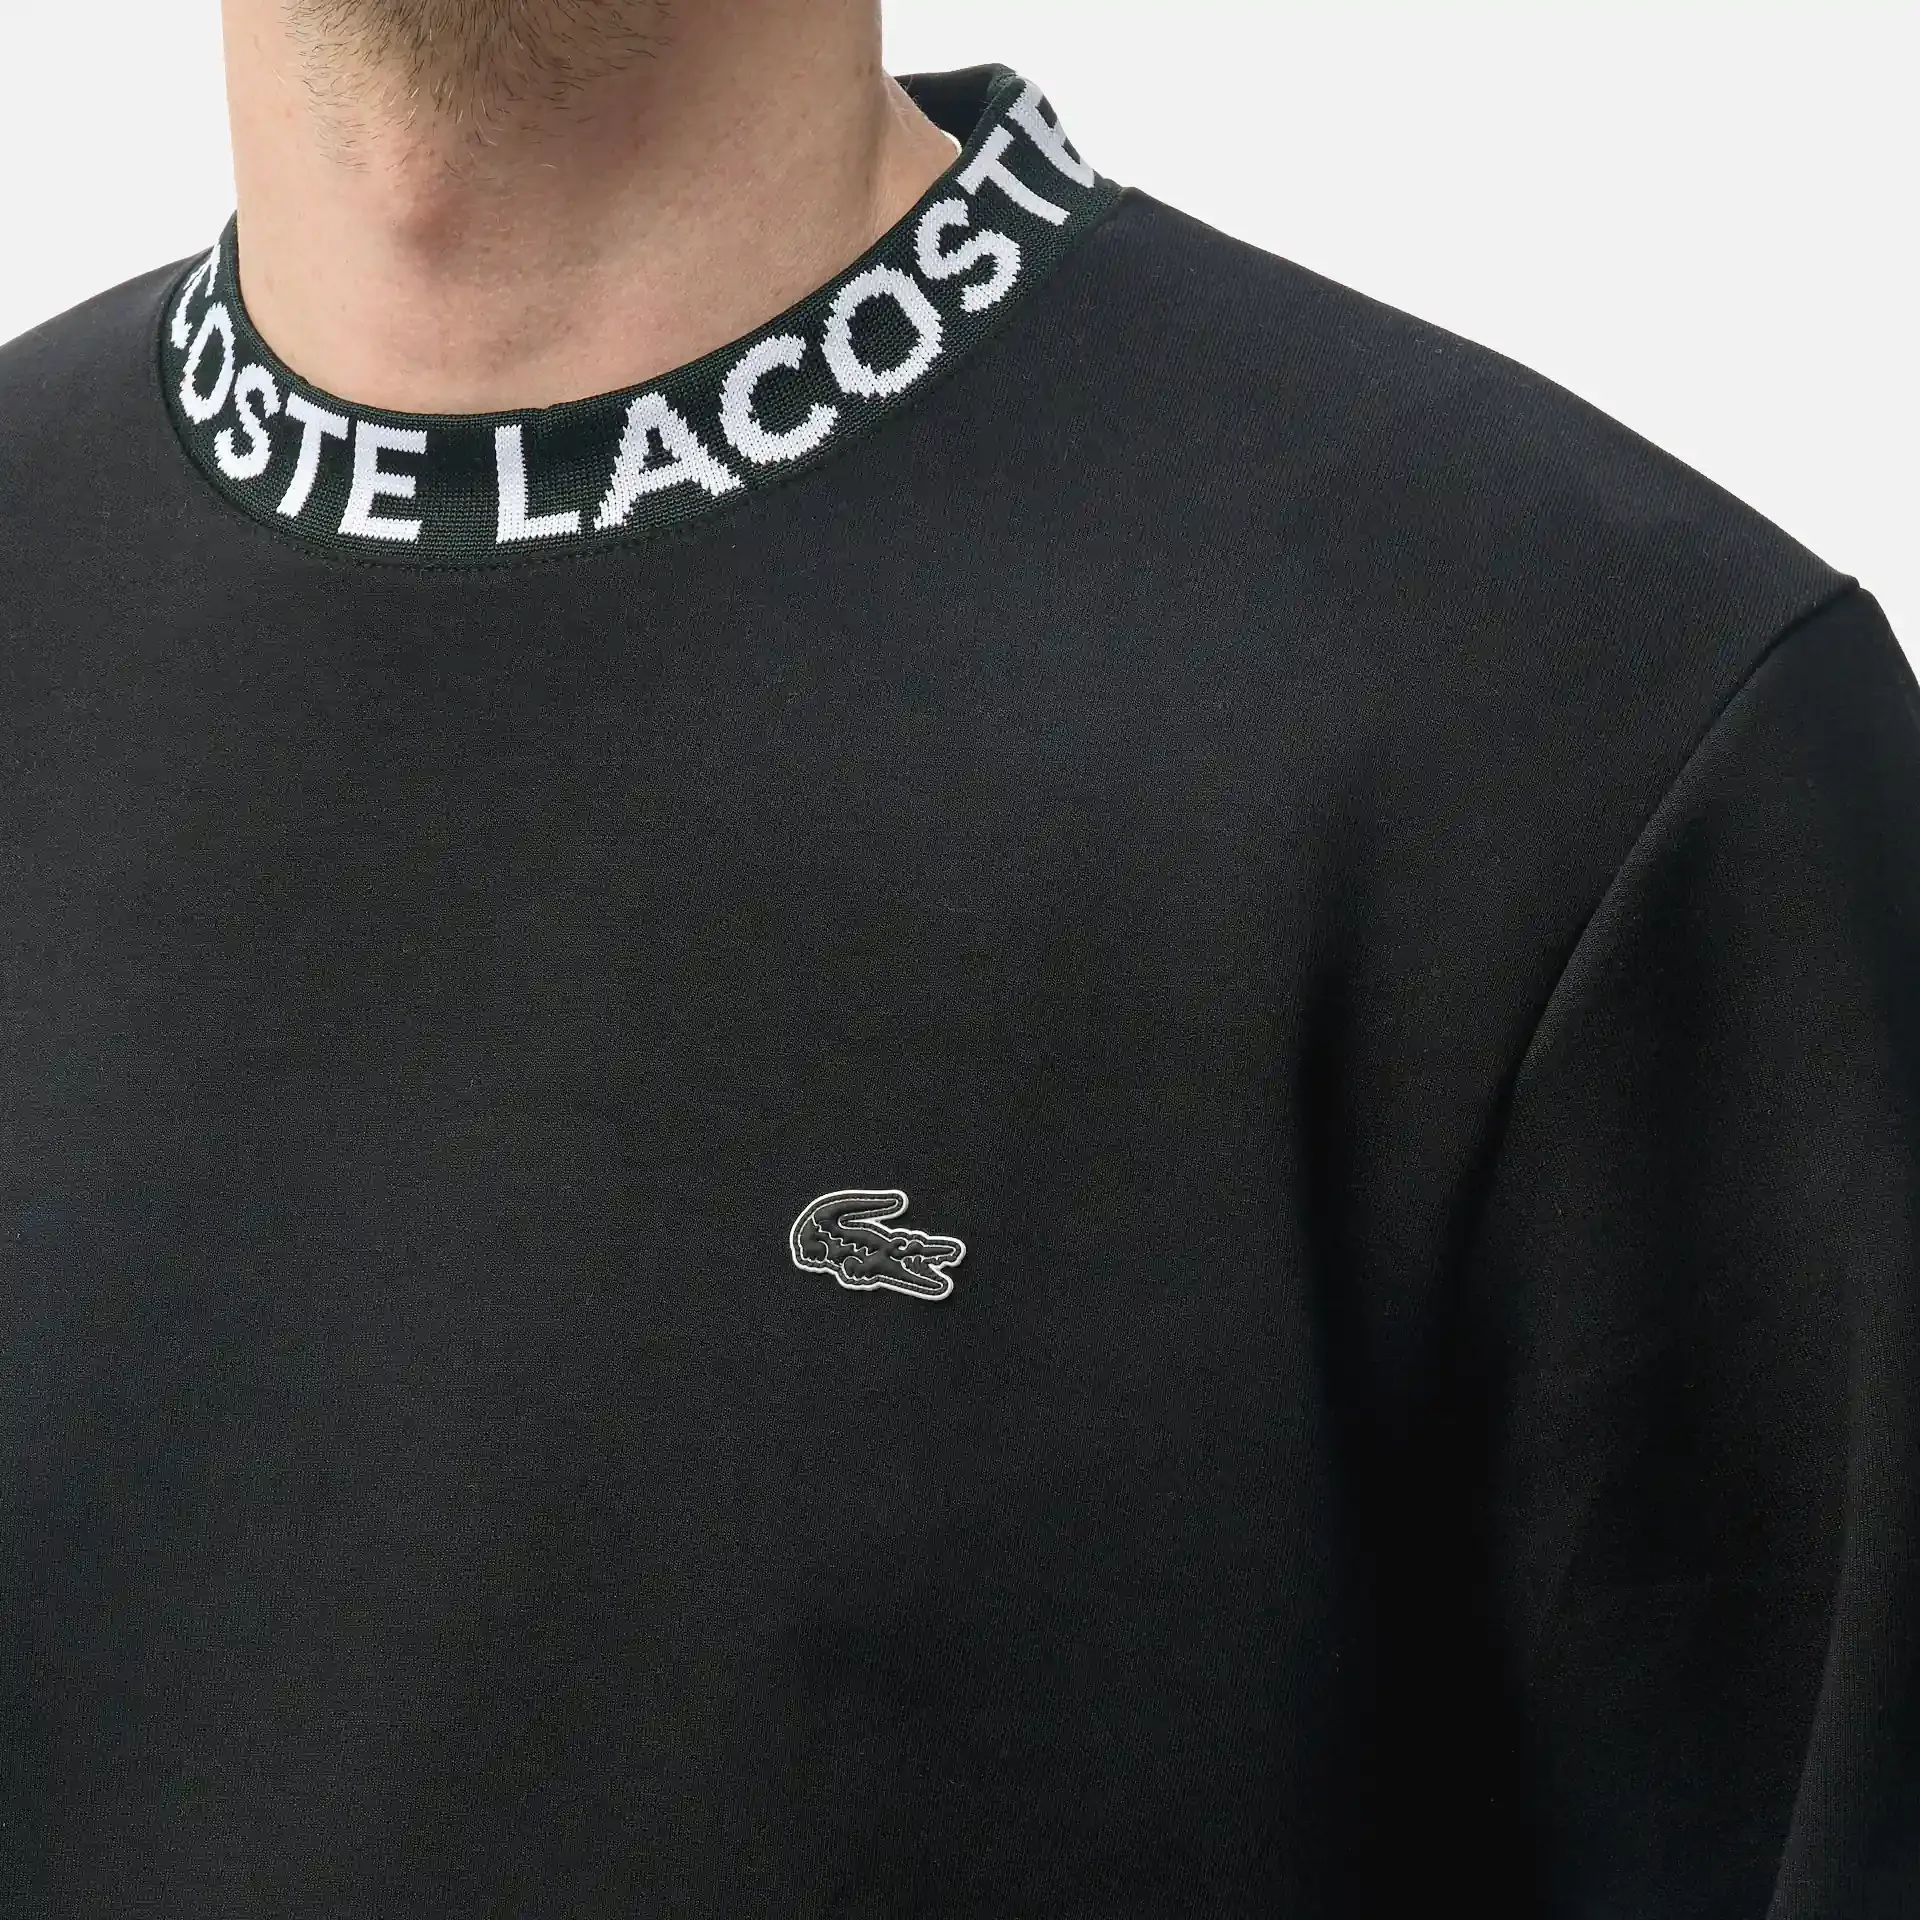  Lacoste Logo Jacquard Collar Sweatshirt Black